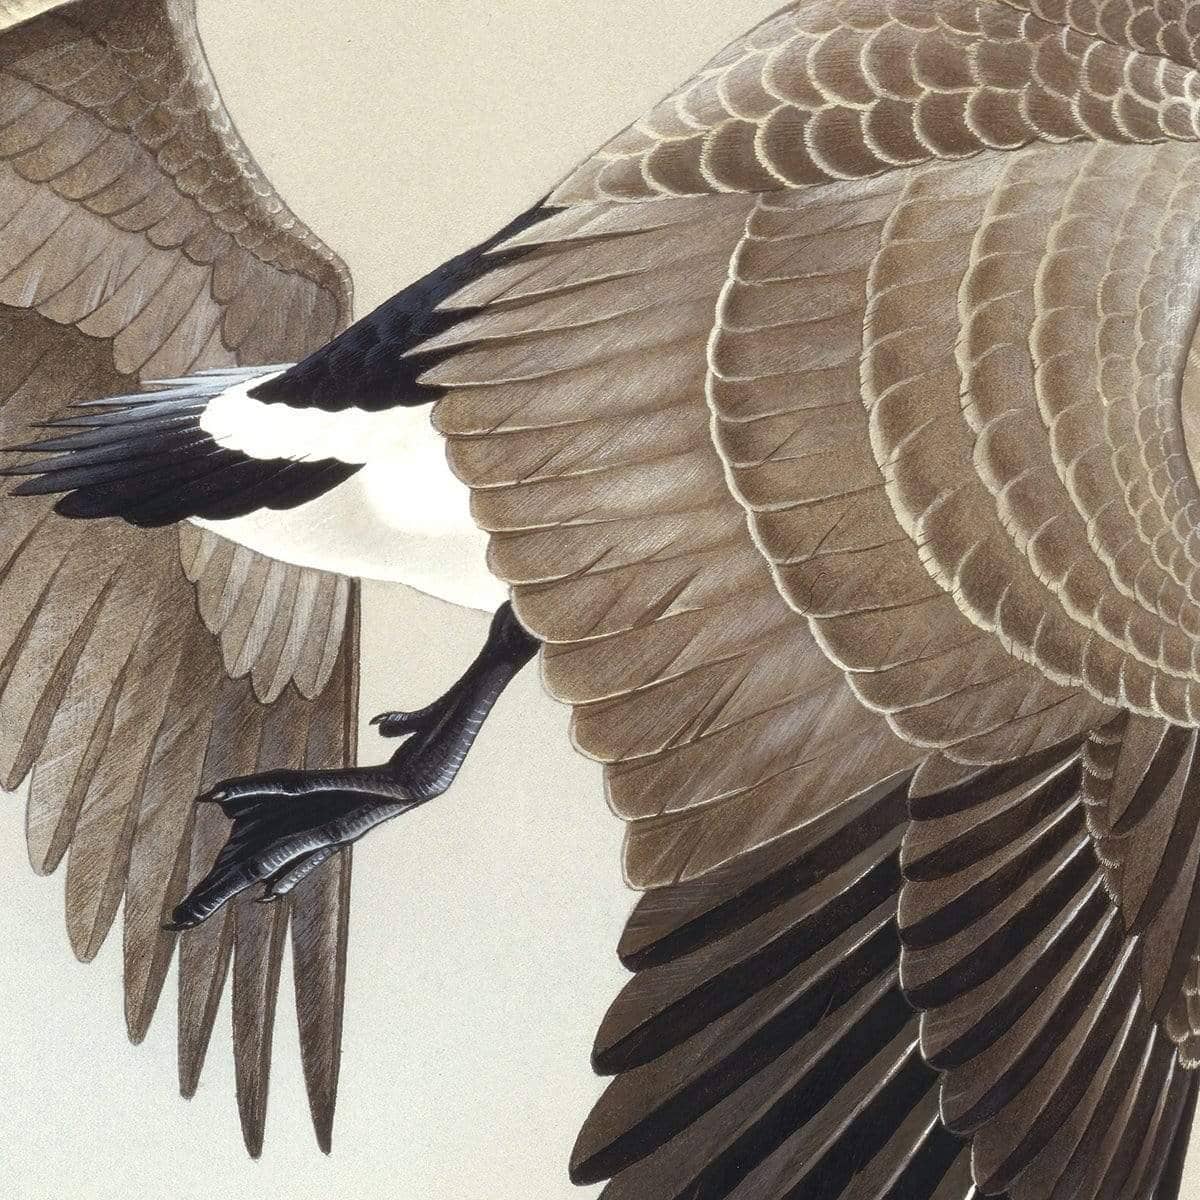 Canada Geese - Framed Print | Artwork by Glen Loates